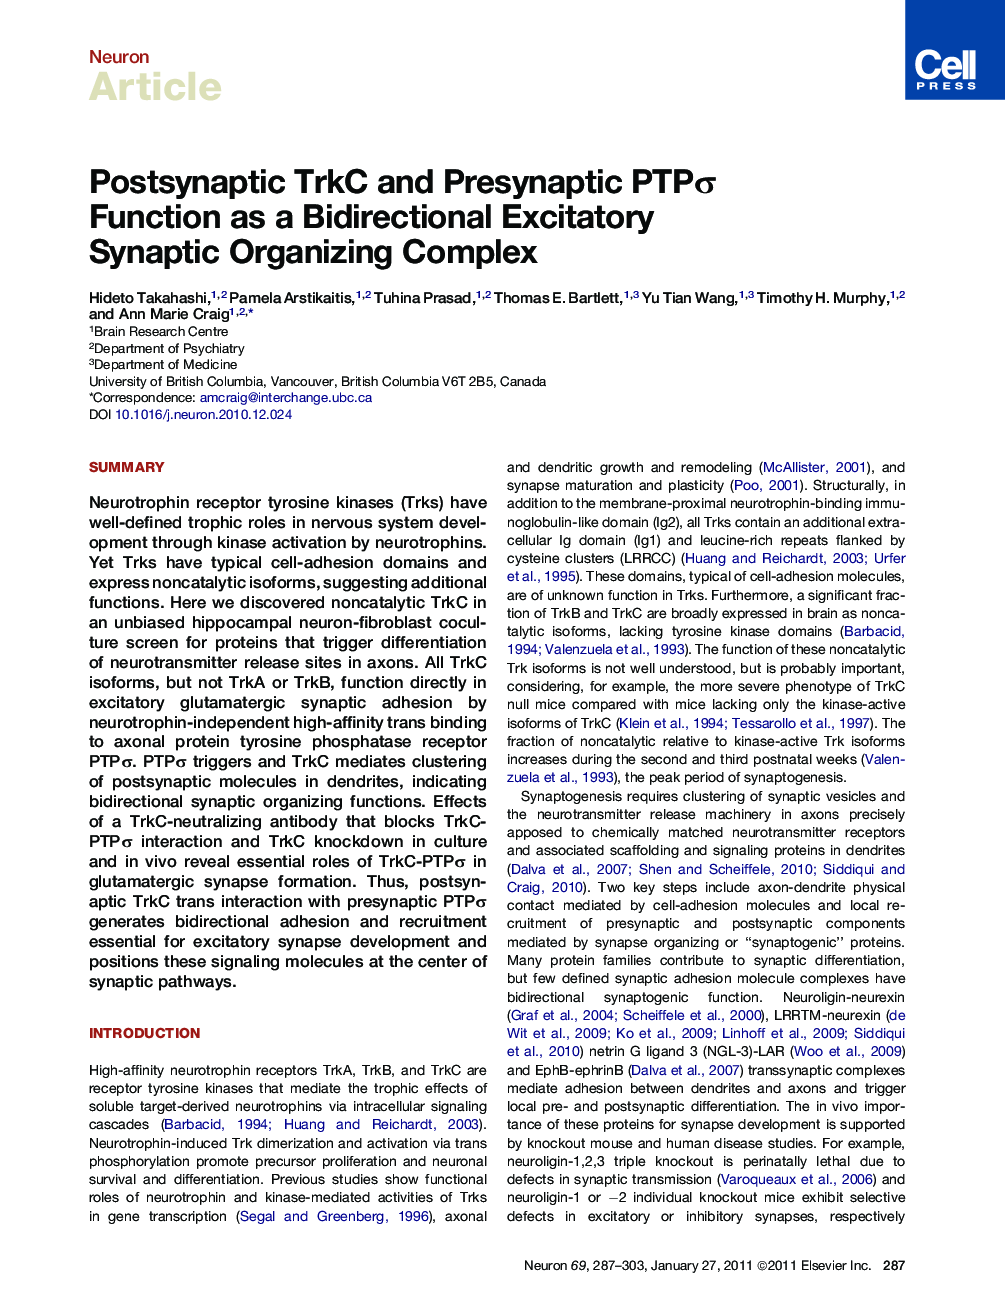 Postsynaptic TrkC and Presynaptic PTPσ Function as a Bidirectional Excitatory Synaptic Organizing Complex